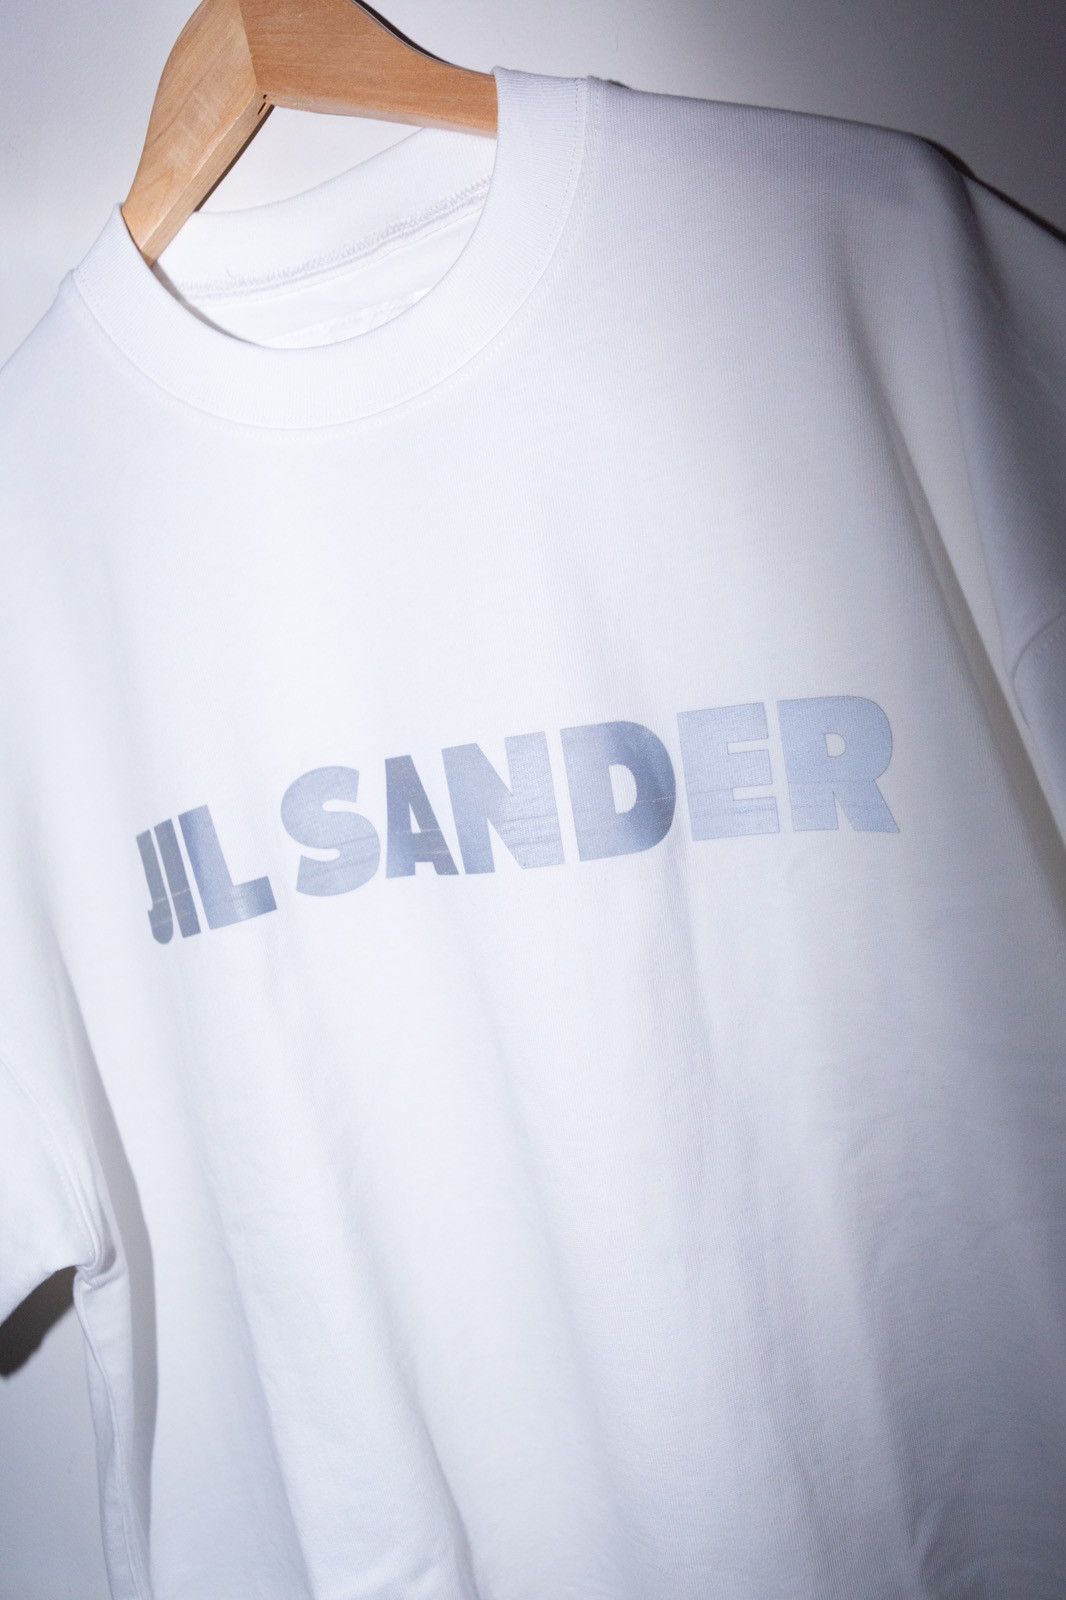 Arc'Teryx Jil sander x Arc’teryx t-shirt tee small | Grailed